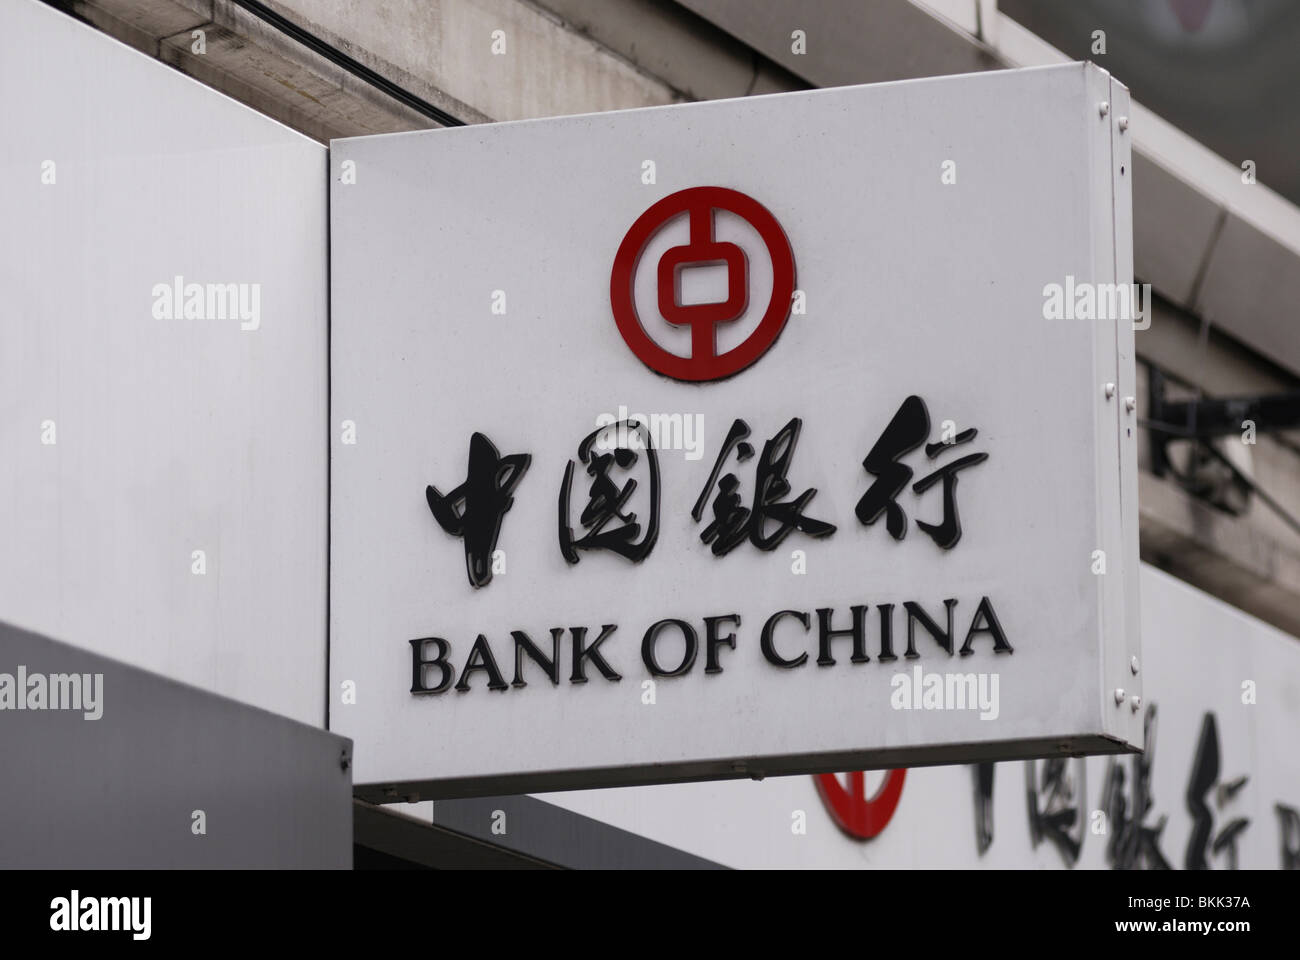 Bank of China Sign, Chinatown, London, England, UK Stock Photo